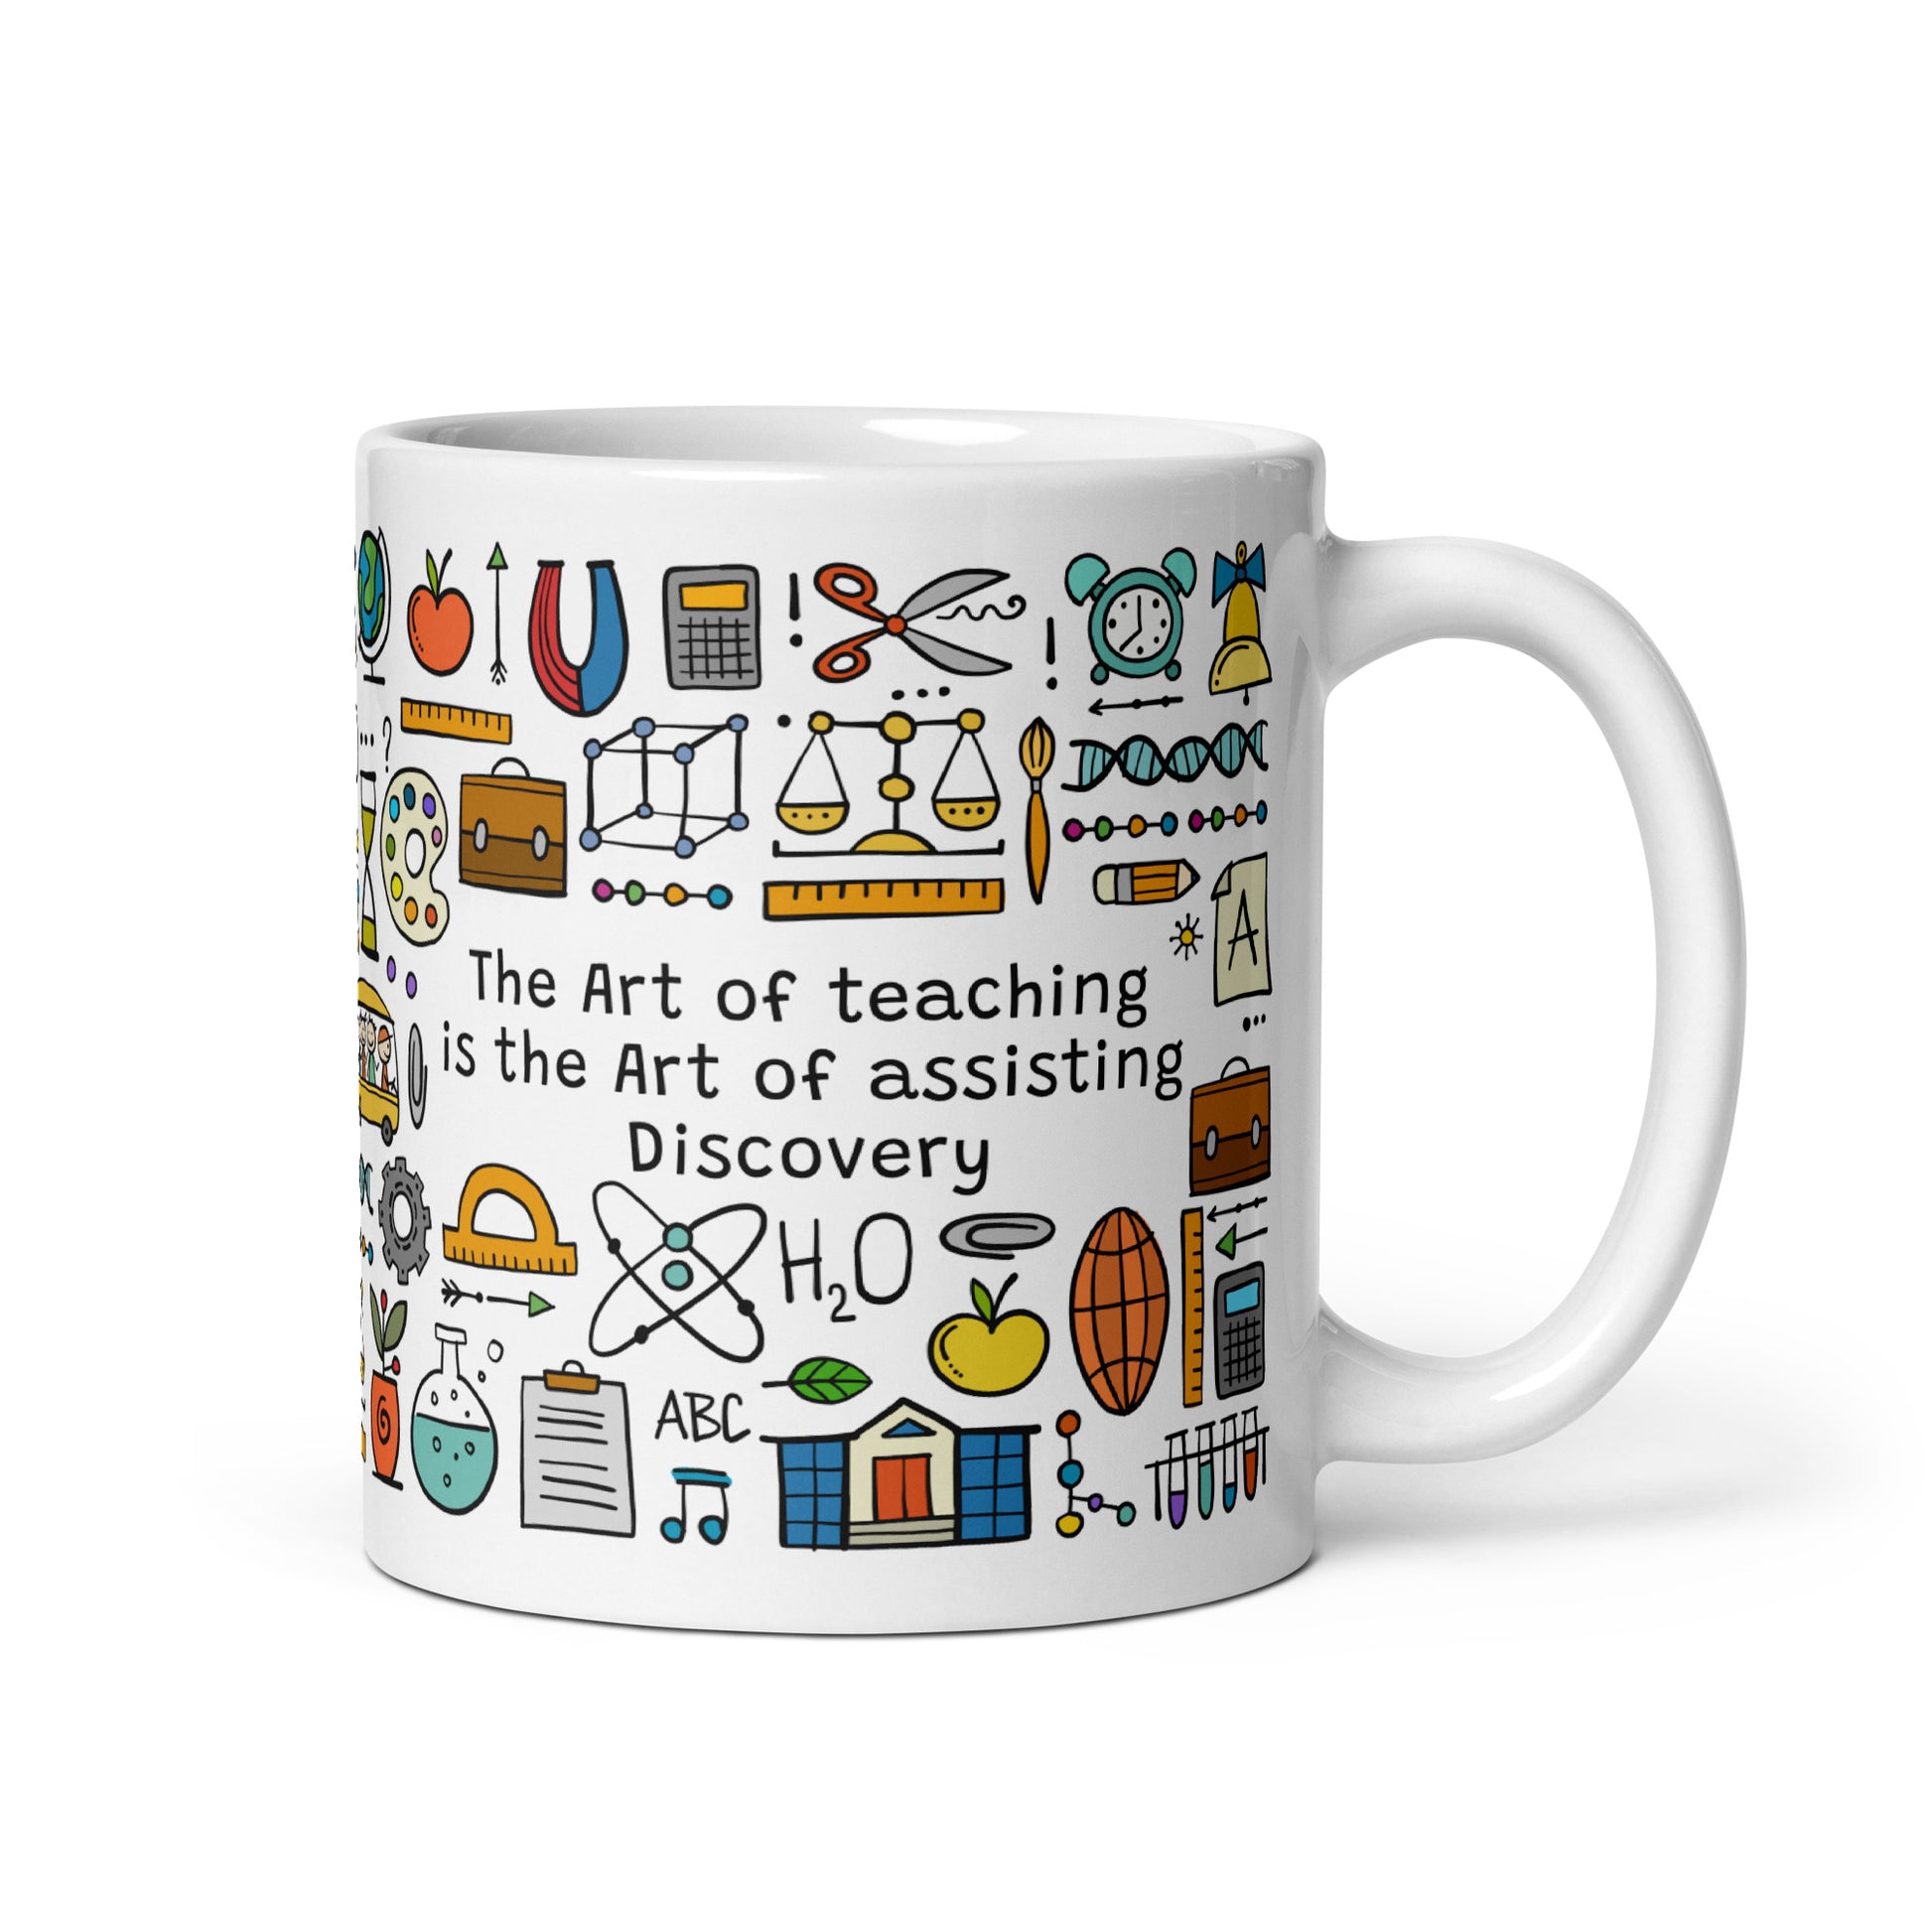 Personalized Ceramic Mug 11oz with Funny School Print